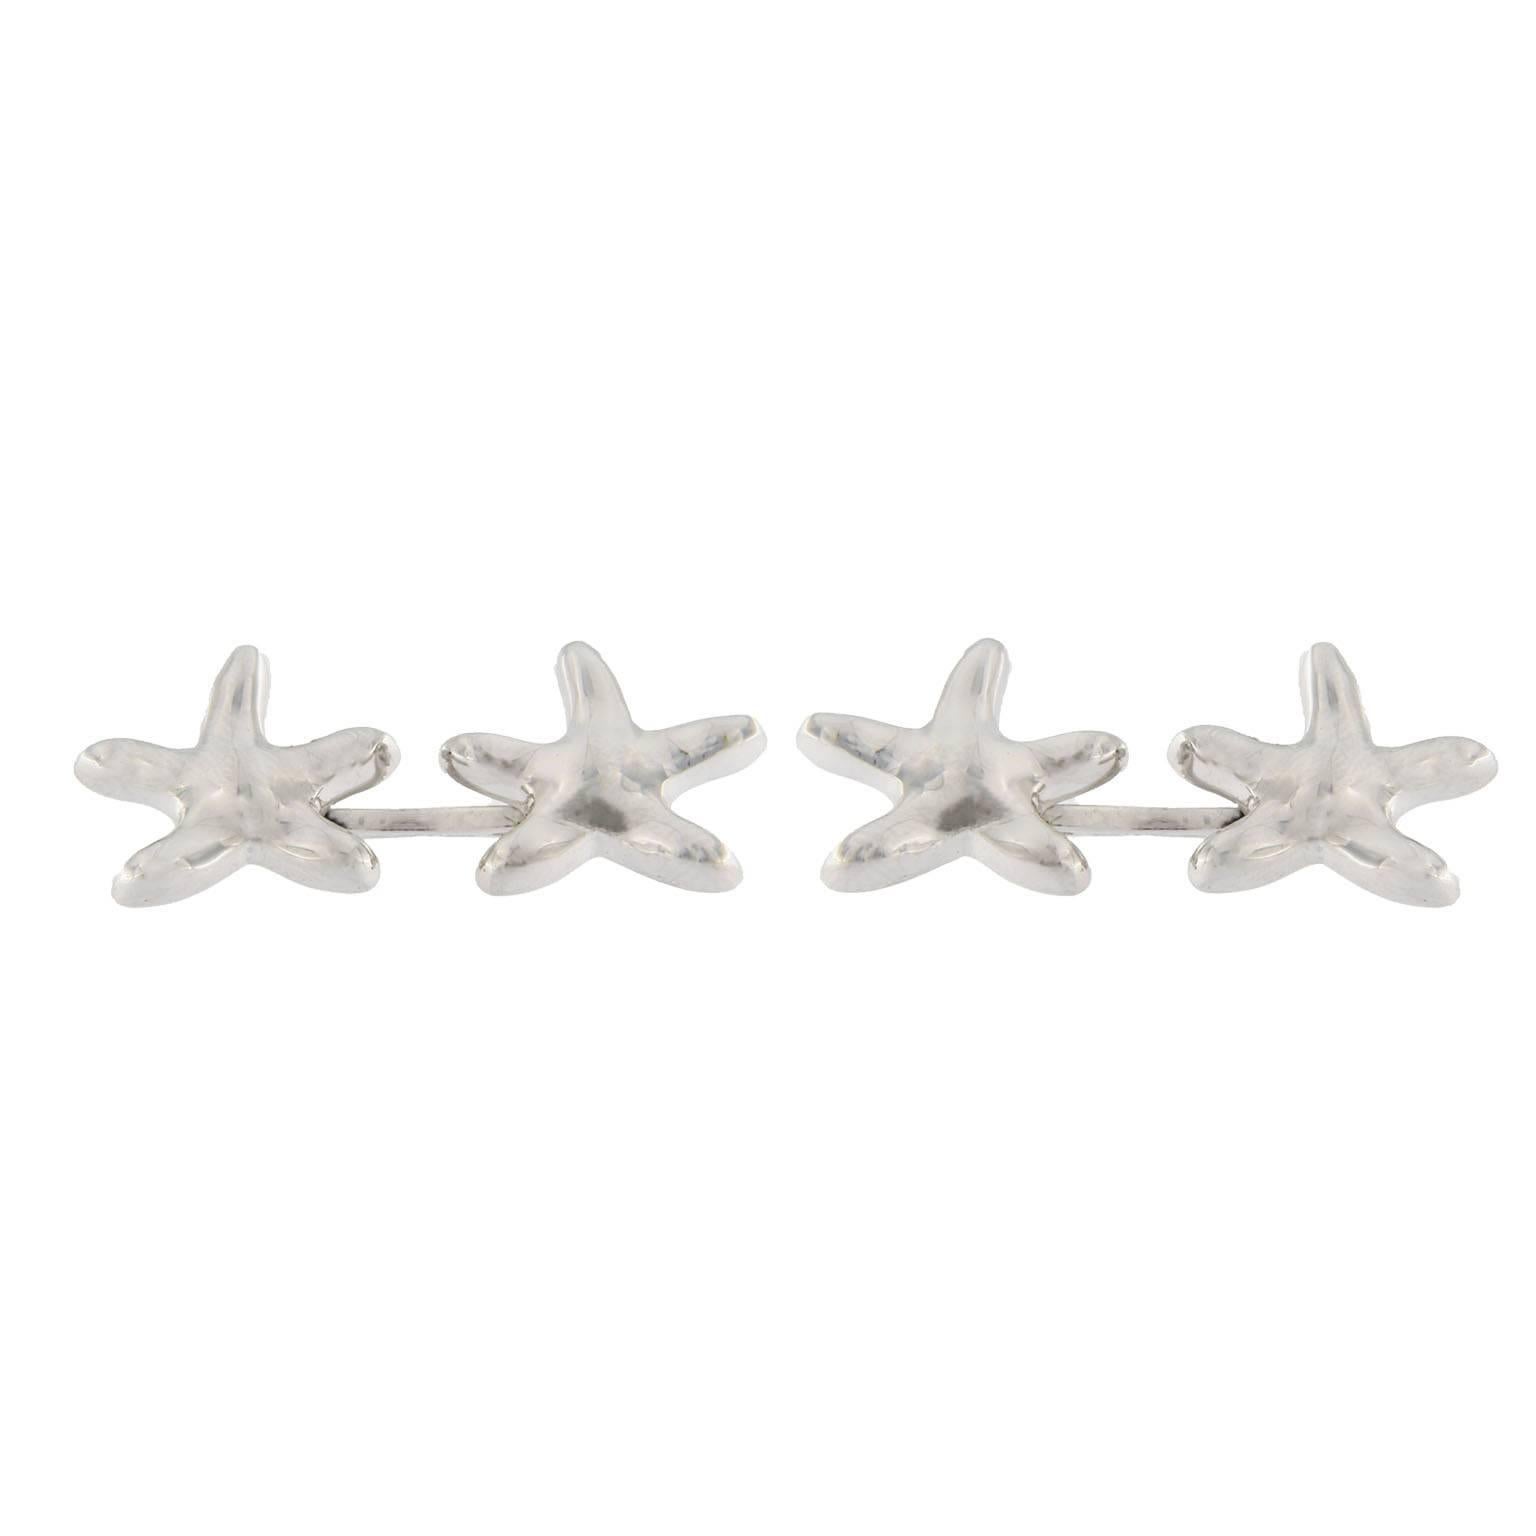 Jona Sterling Silver Starfish Cufflinks